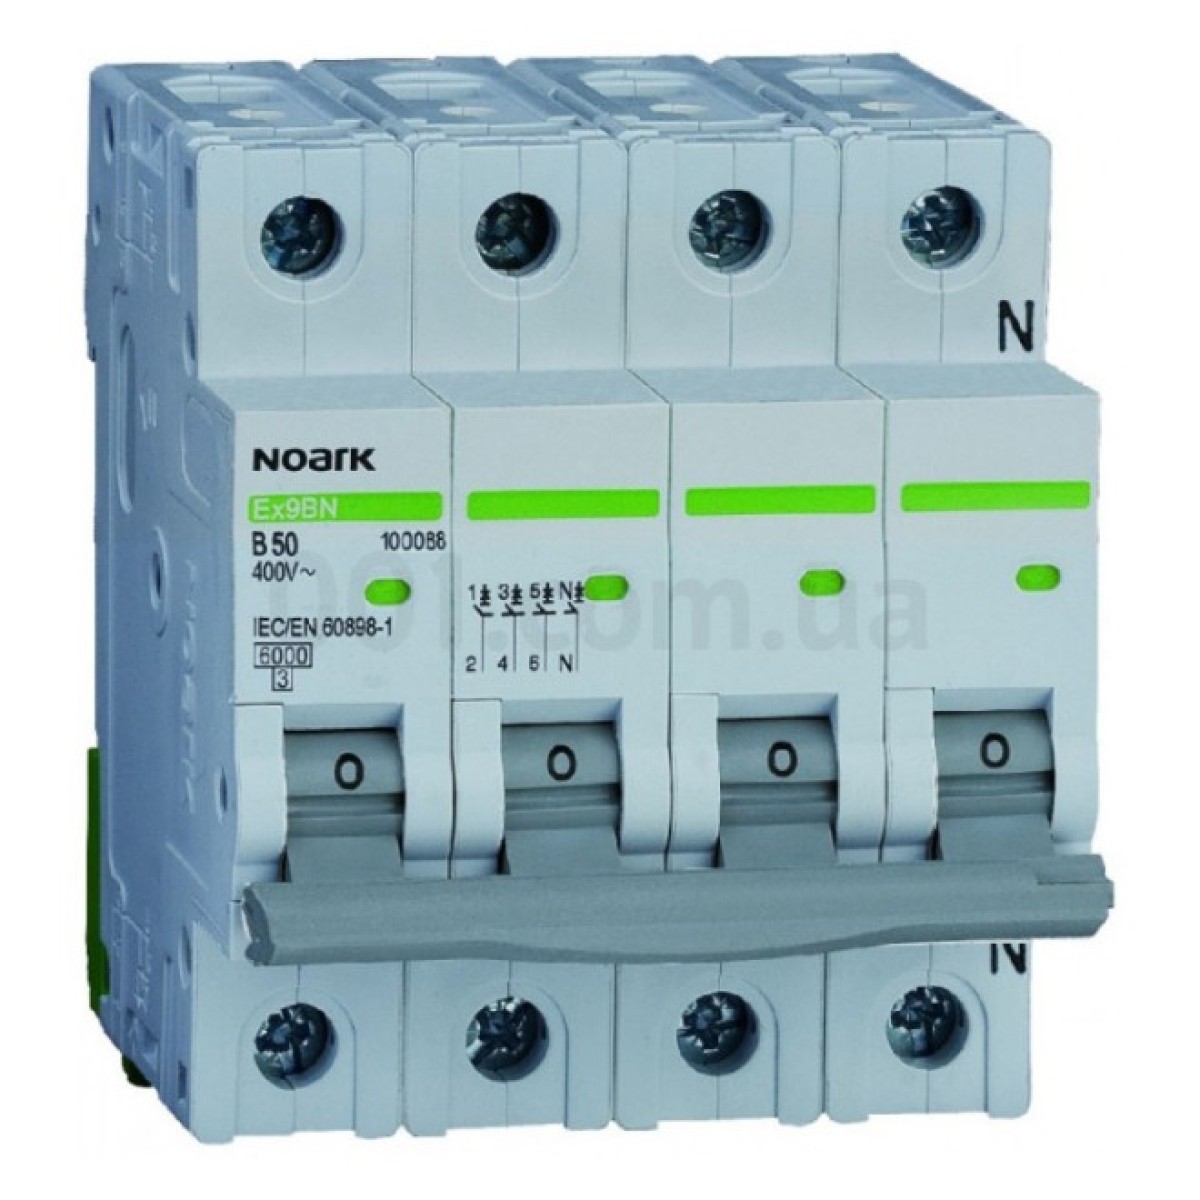 Модульный автоматический выключатель Ex9BN 6kA хар-ка C 50A 3P+N, NOARK 256_256.jpg